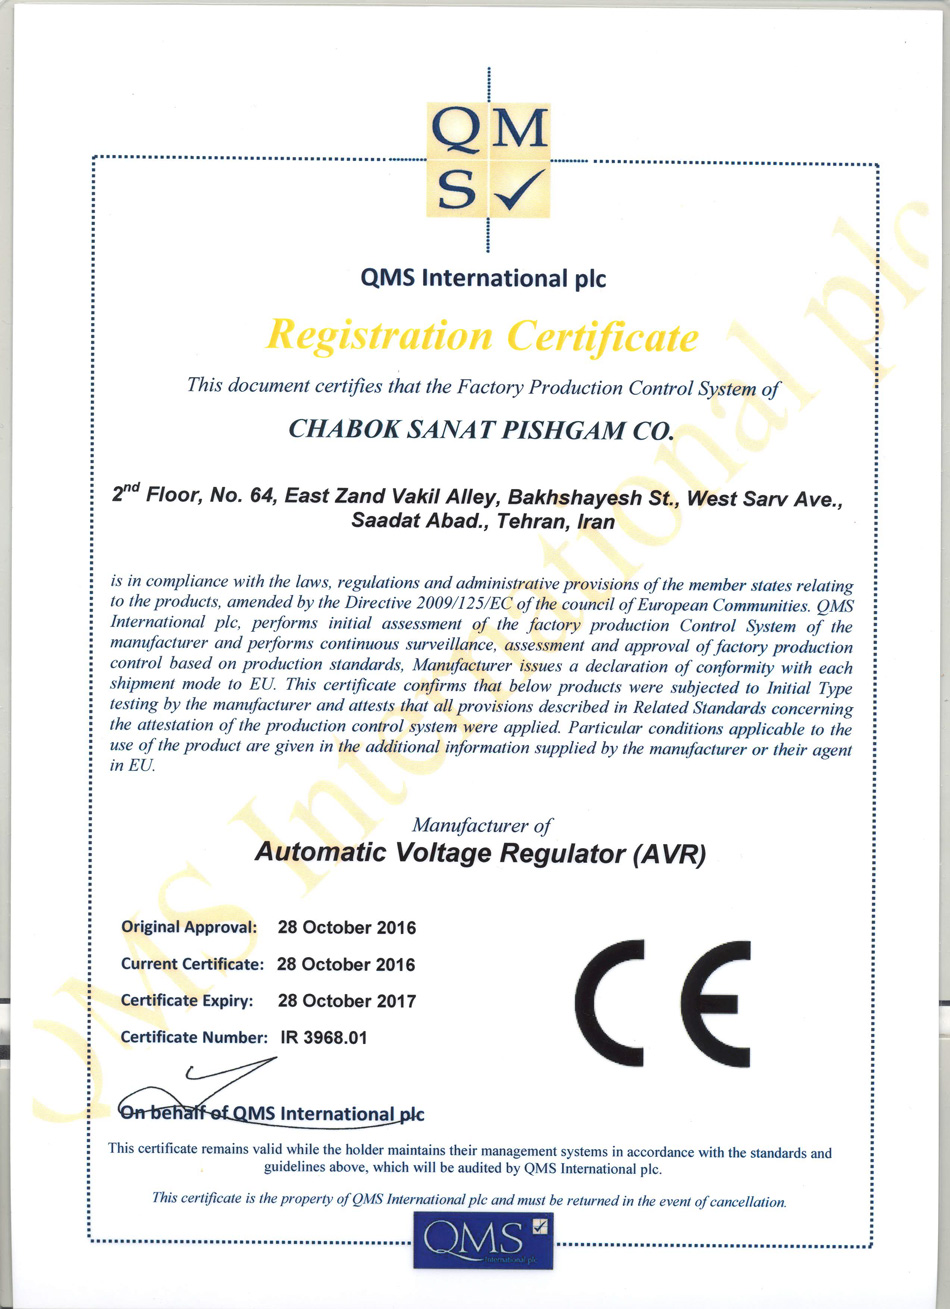 Registration Certificate of Automatic Voltage Regulator